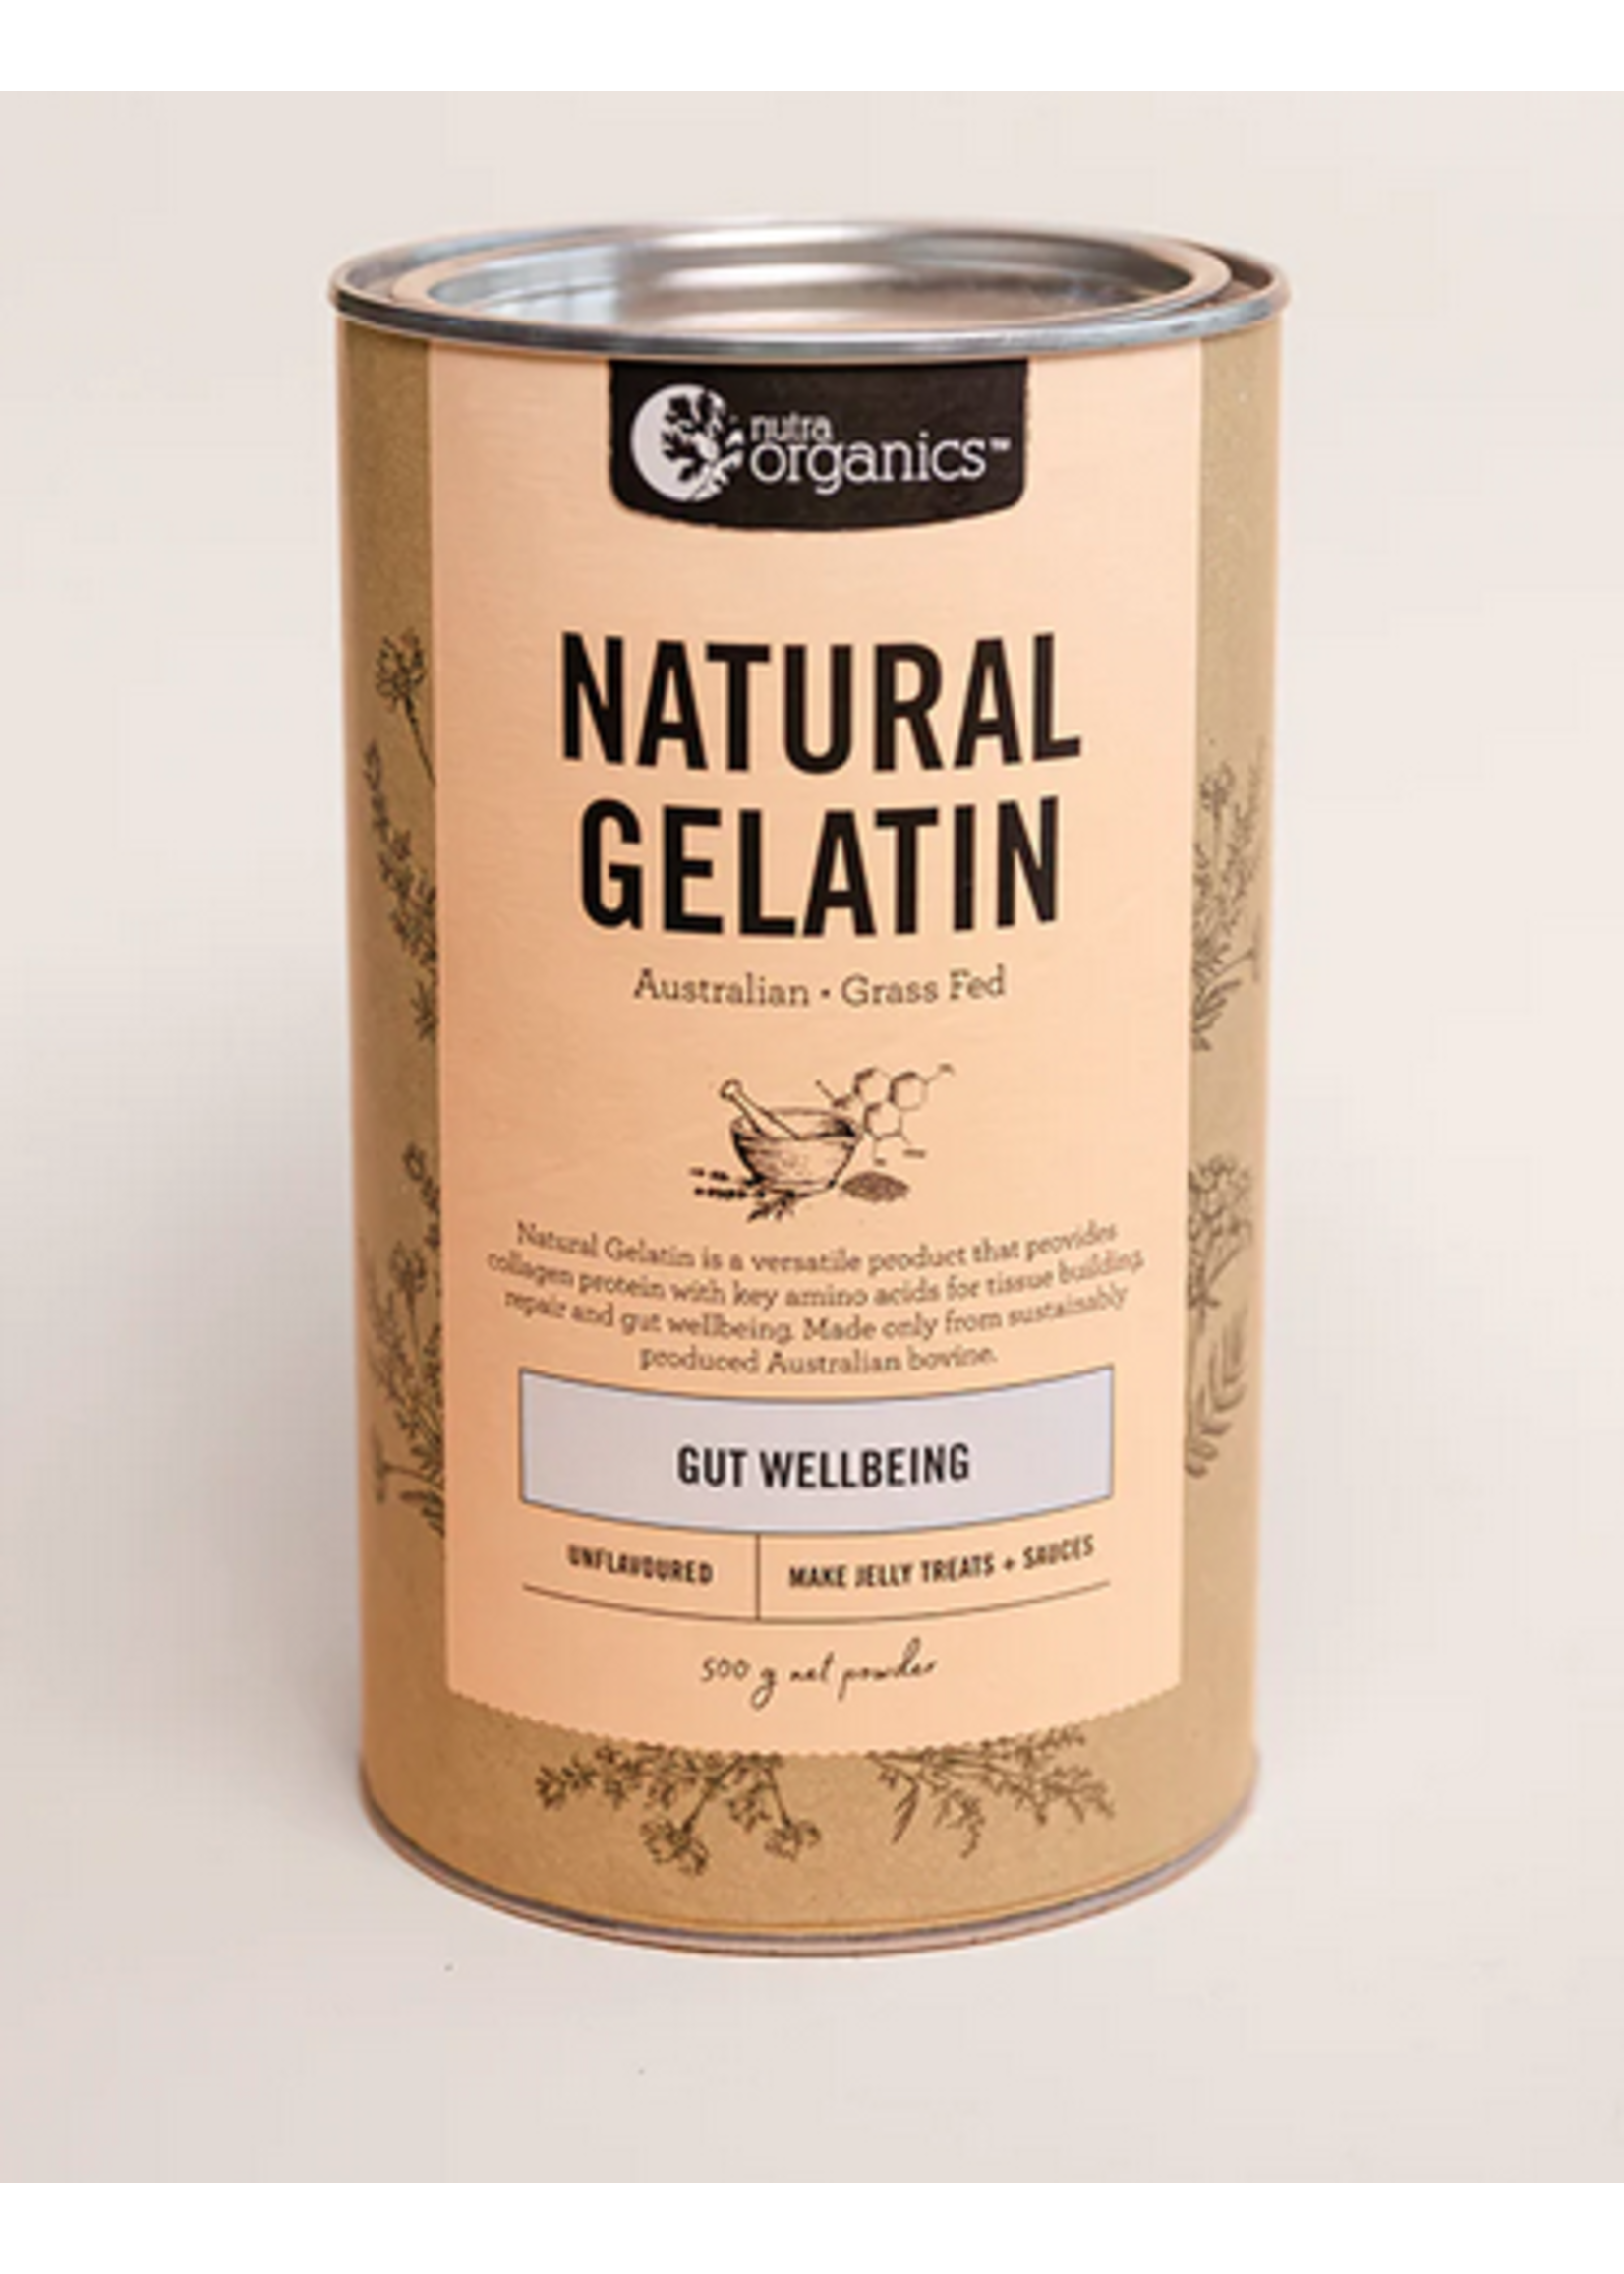 NutraOrganics Nutra Organics Natural Gelatine 500g